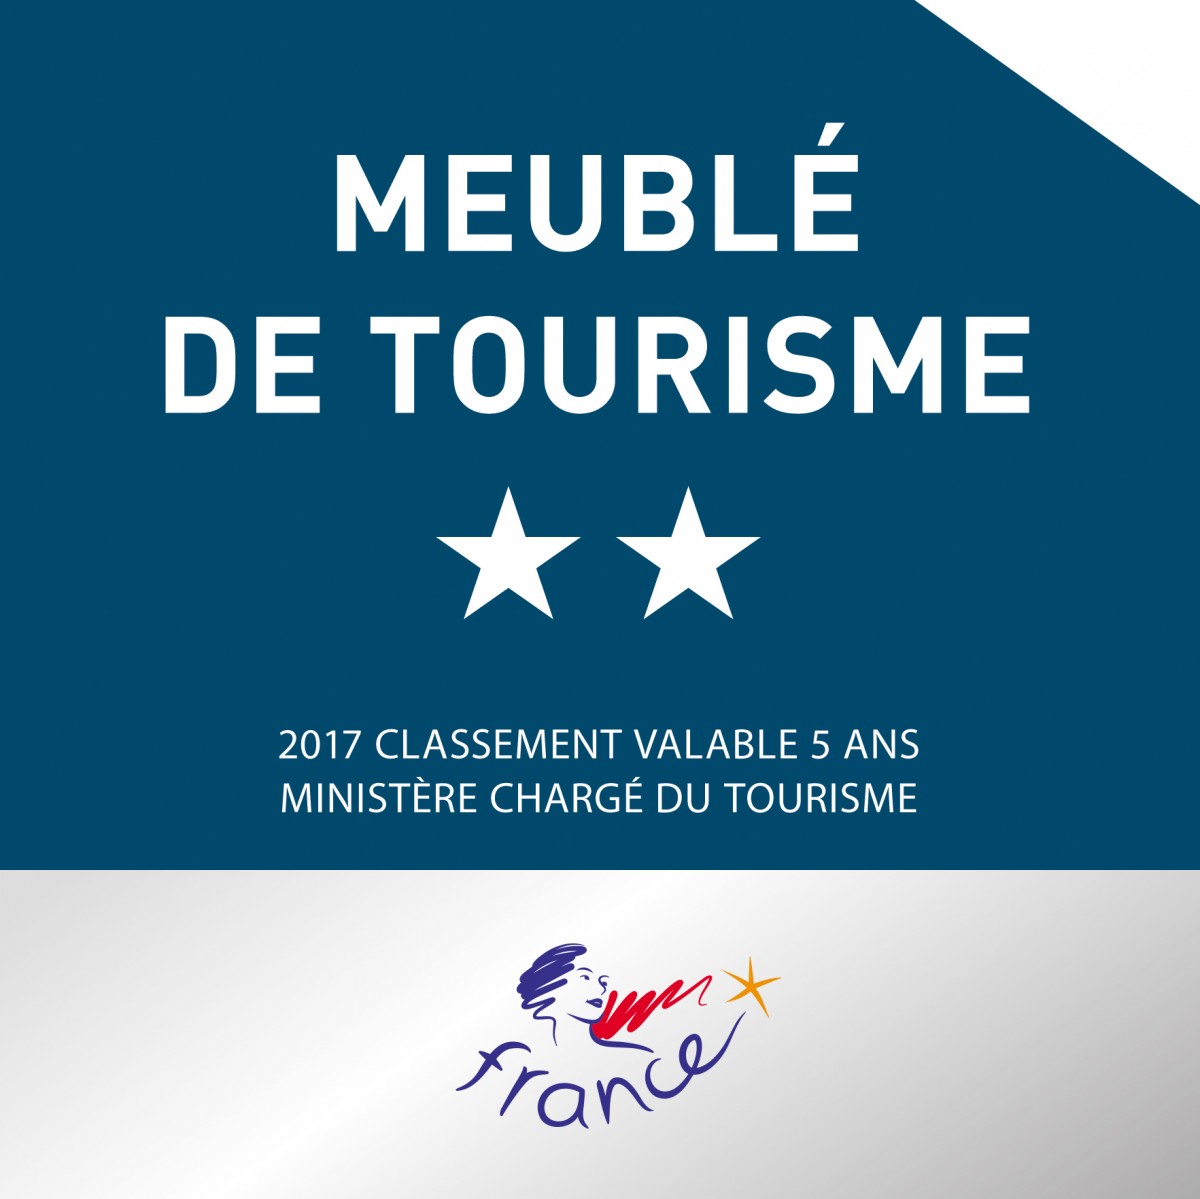 plaque-meuble-tourisme-2-2017-13874